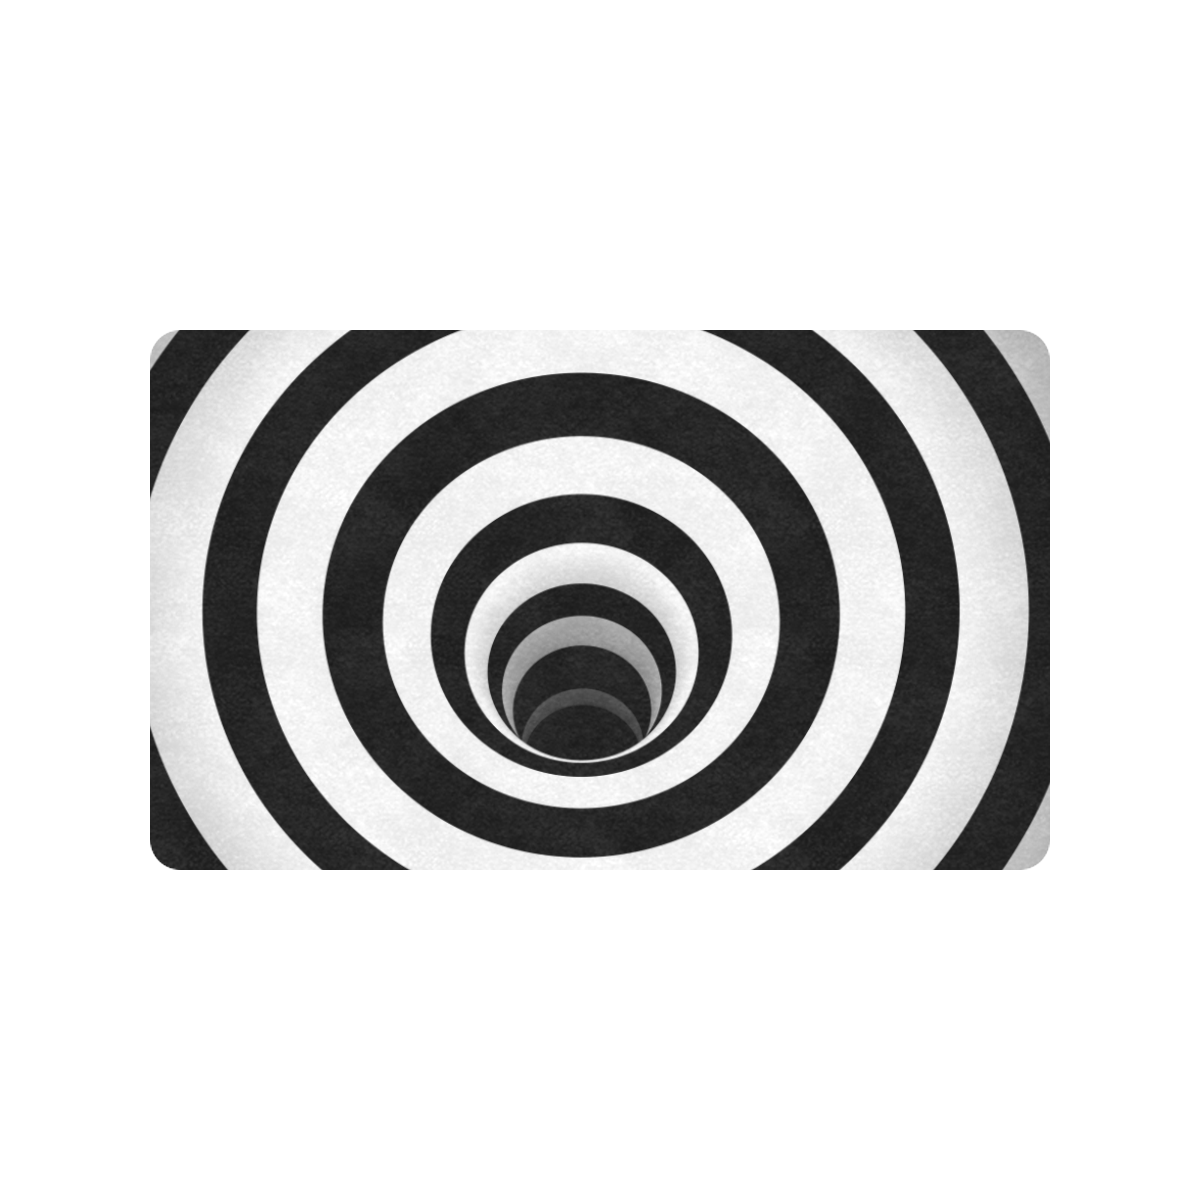 Optical Illusion Black Hole Rings (Black/White) Doormat 30"x18" (Black Base)